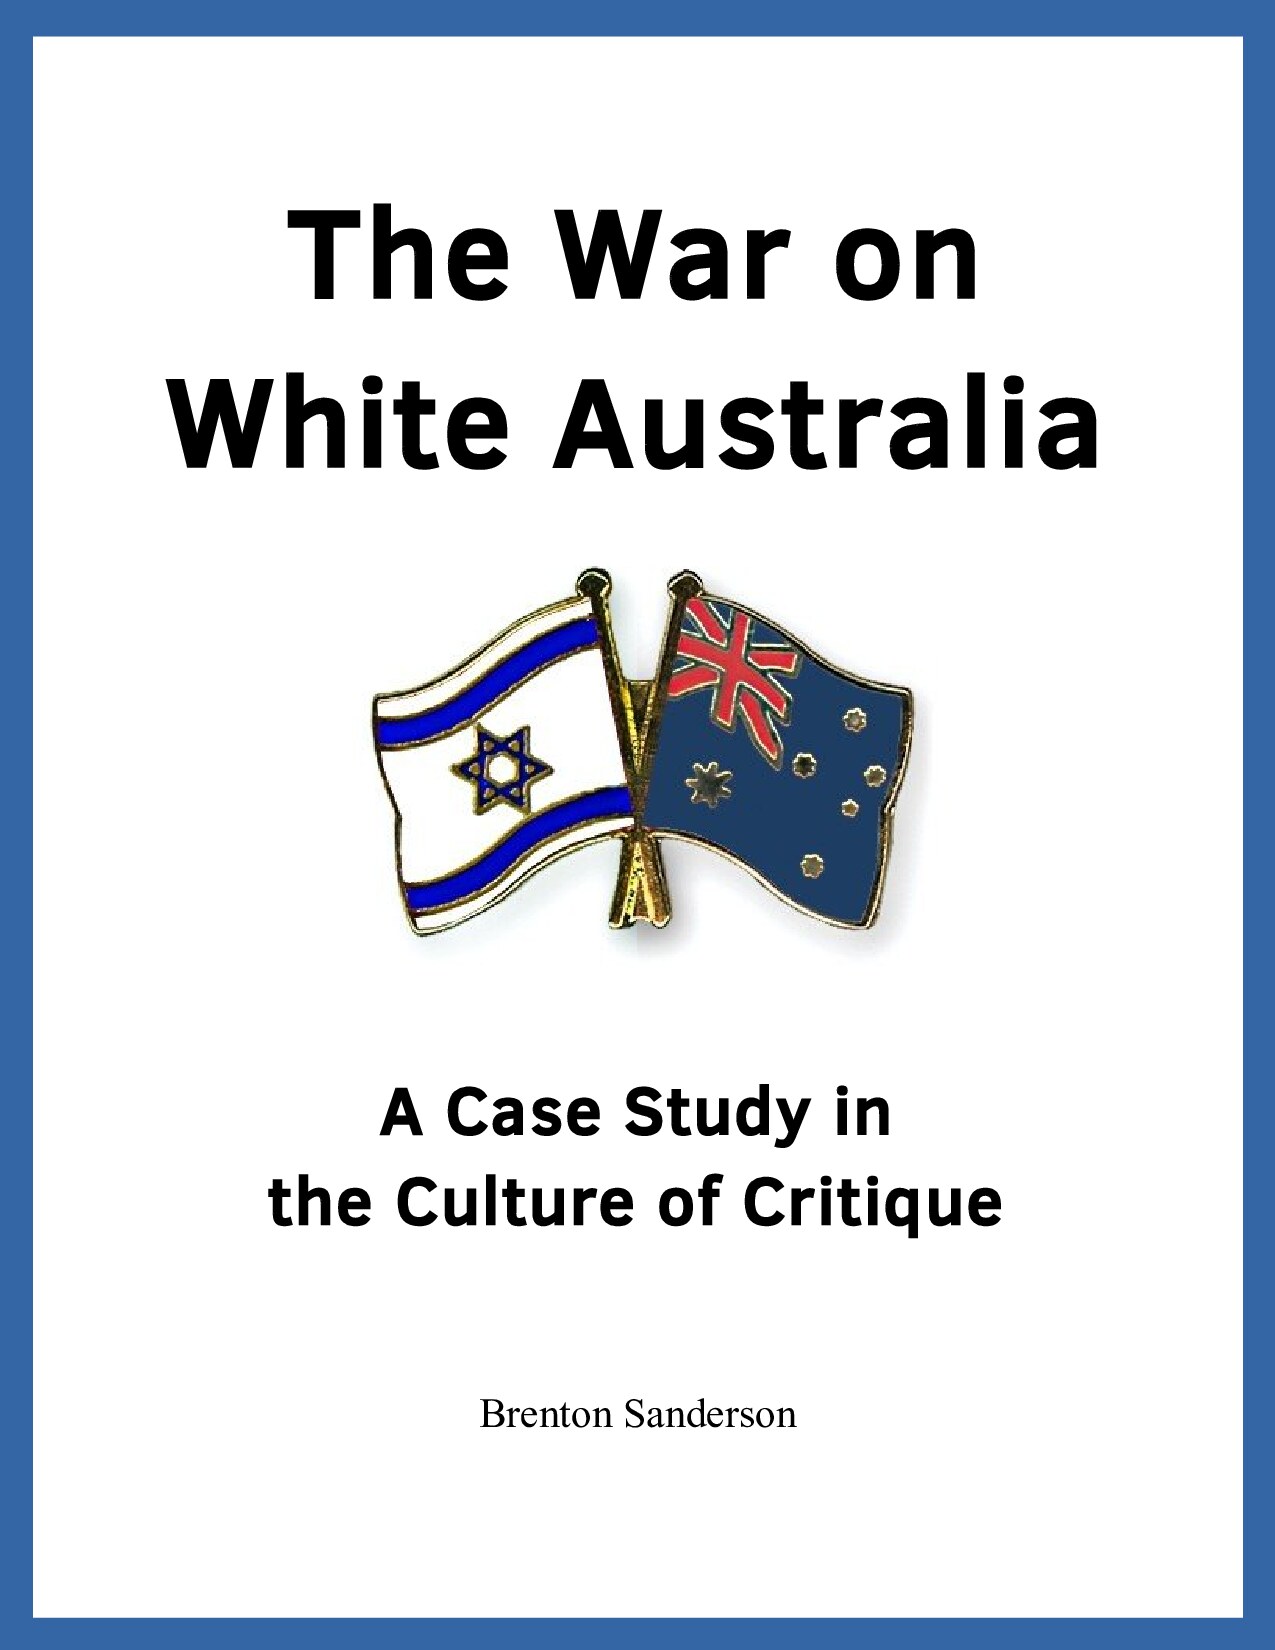 Sanderson, Brenton; The War on White Australia